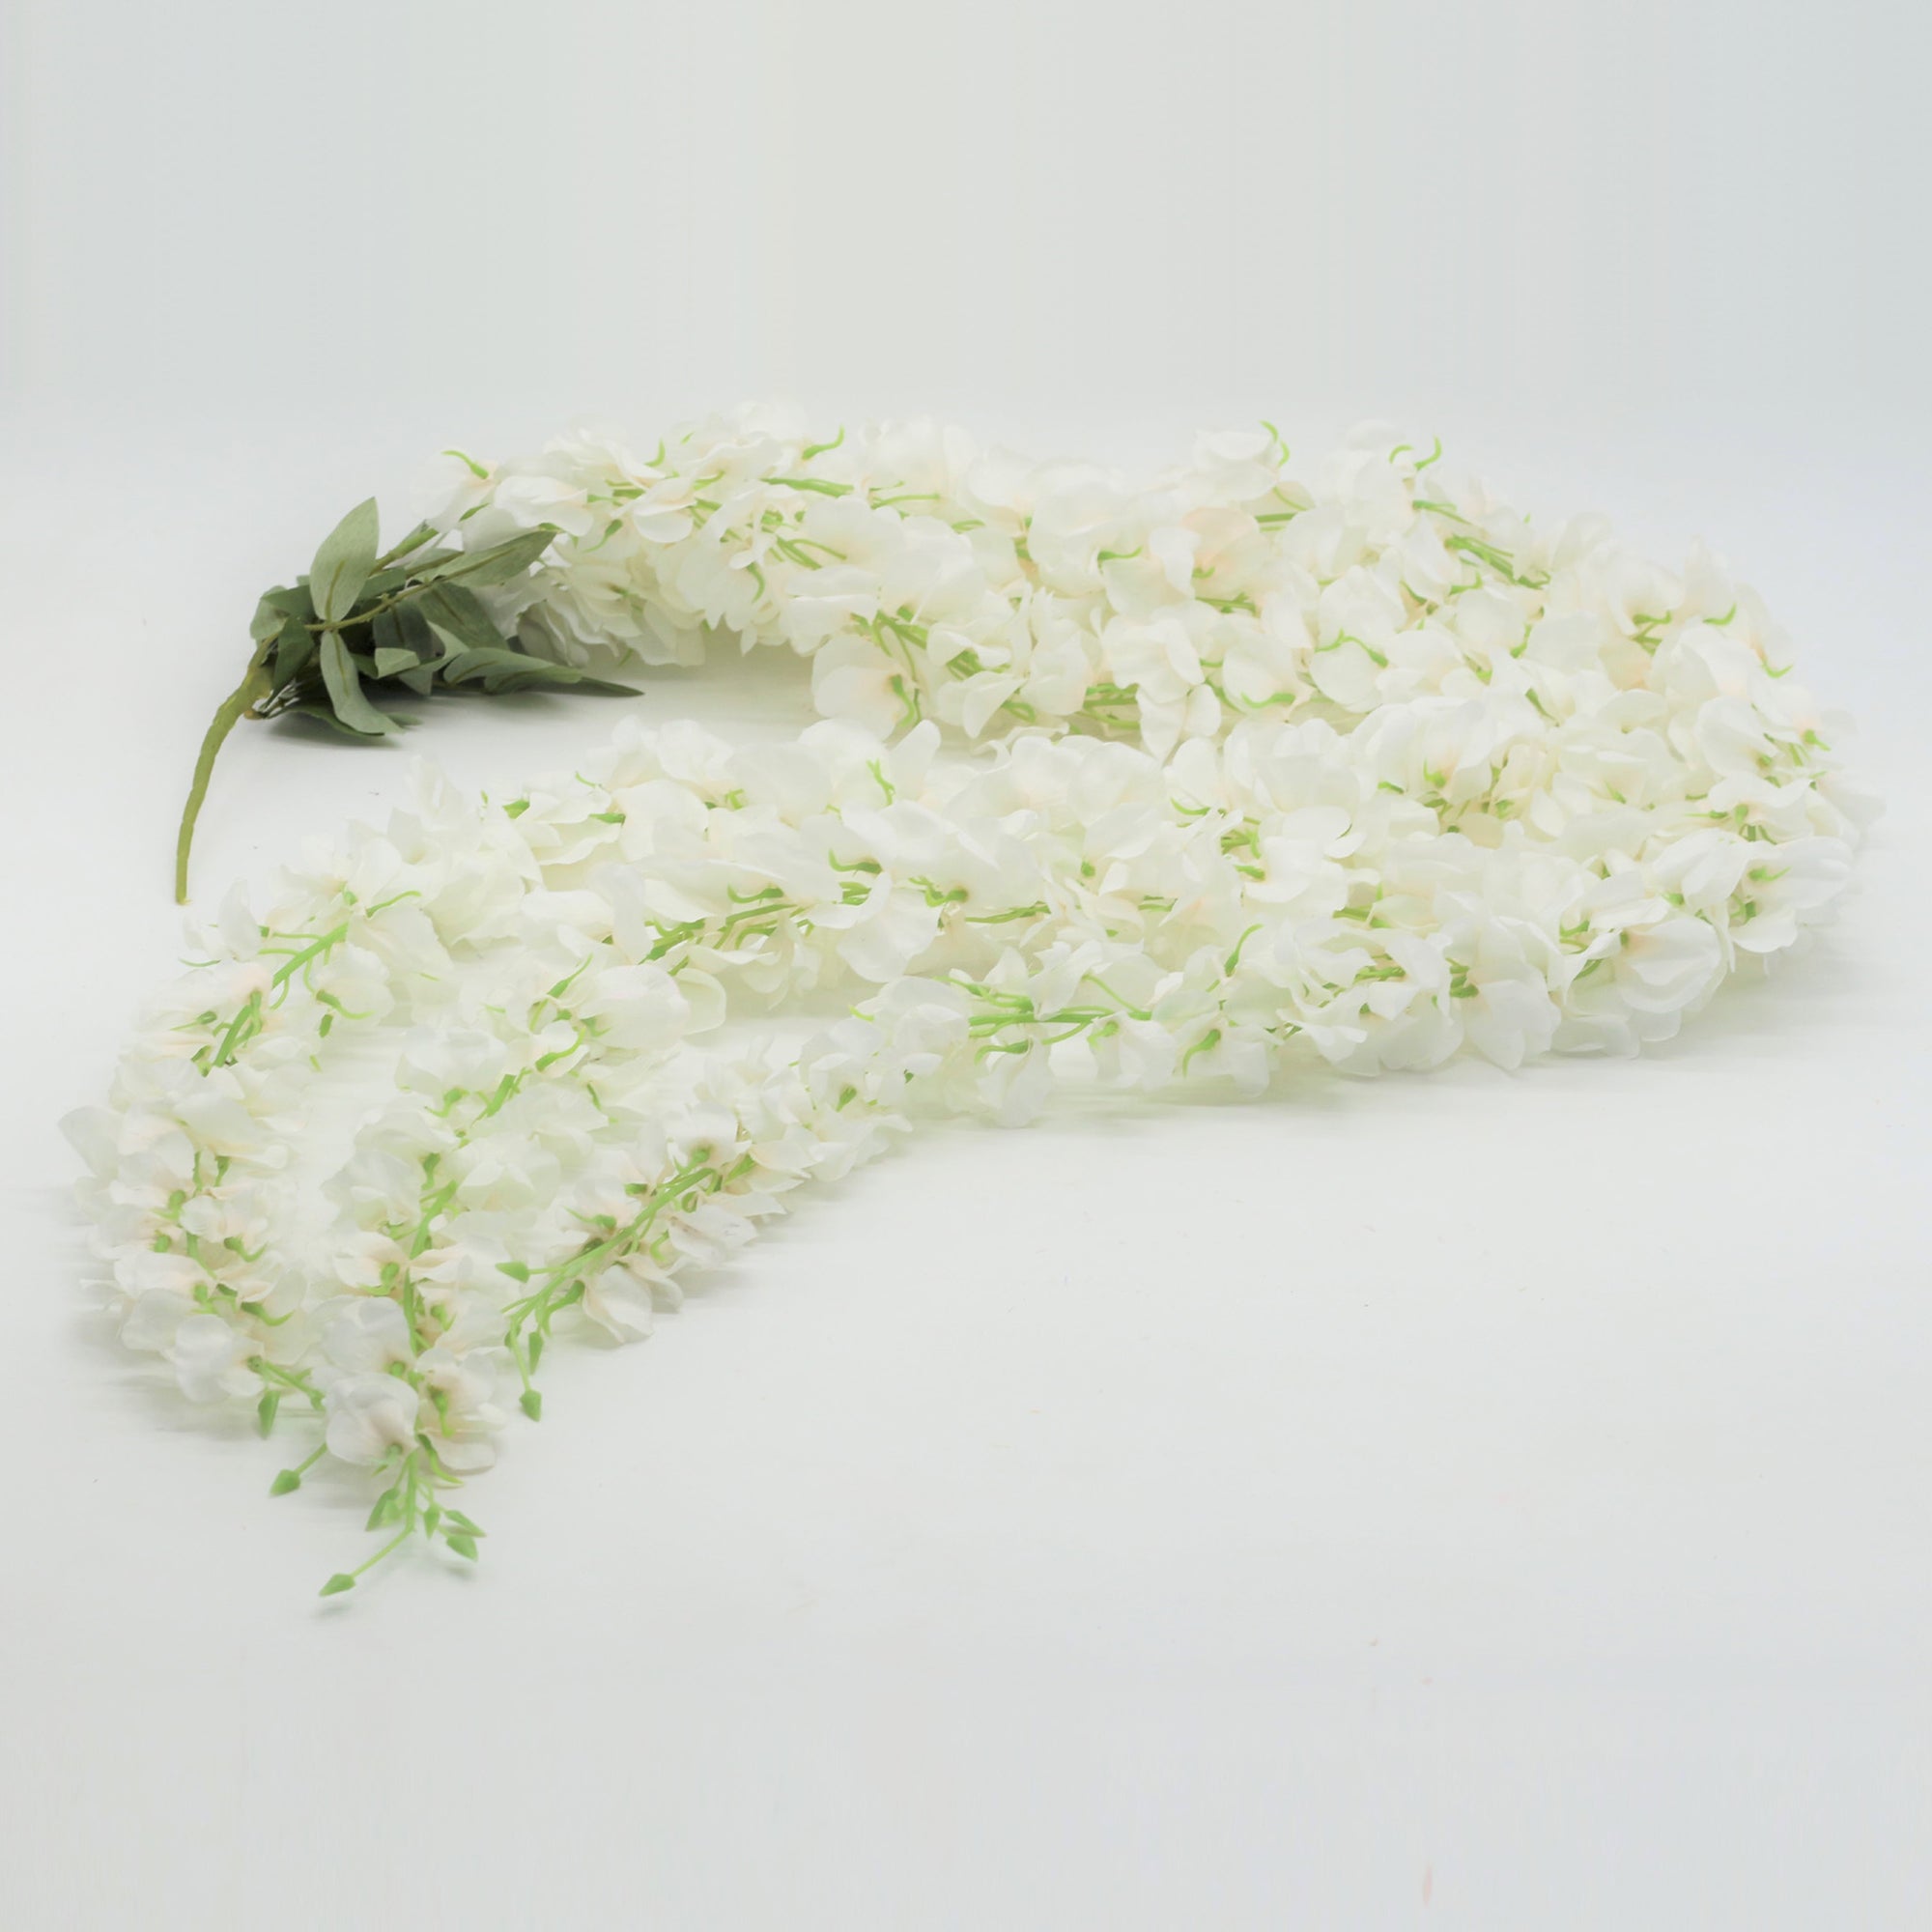 White Wisteria Vines Artificial Hanging Flower Garland